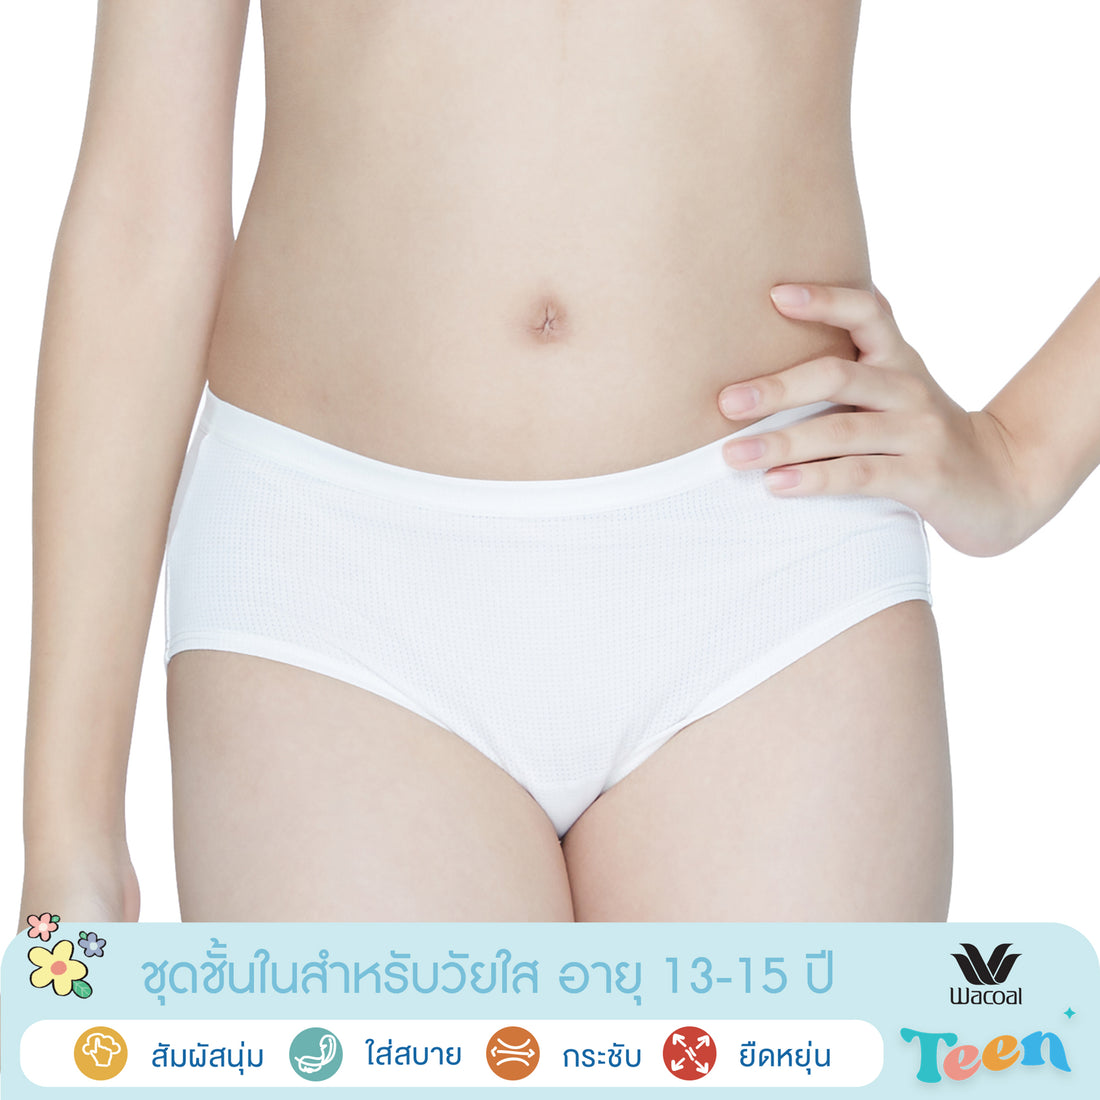 Wacoal Teen Panty กางเกงในสำหรับวัยใส รุ่น MUT303 สีครีม (CR)